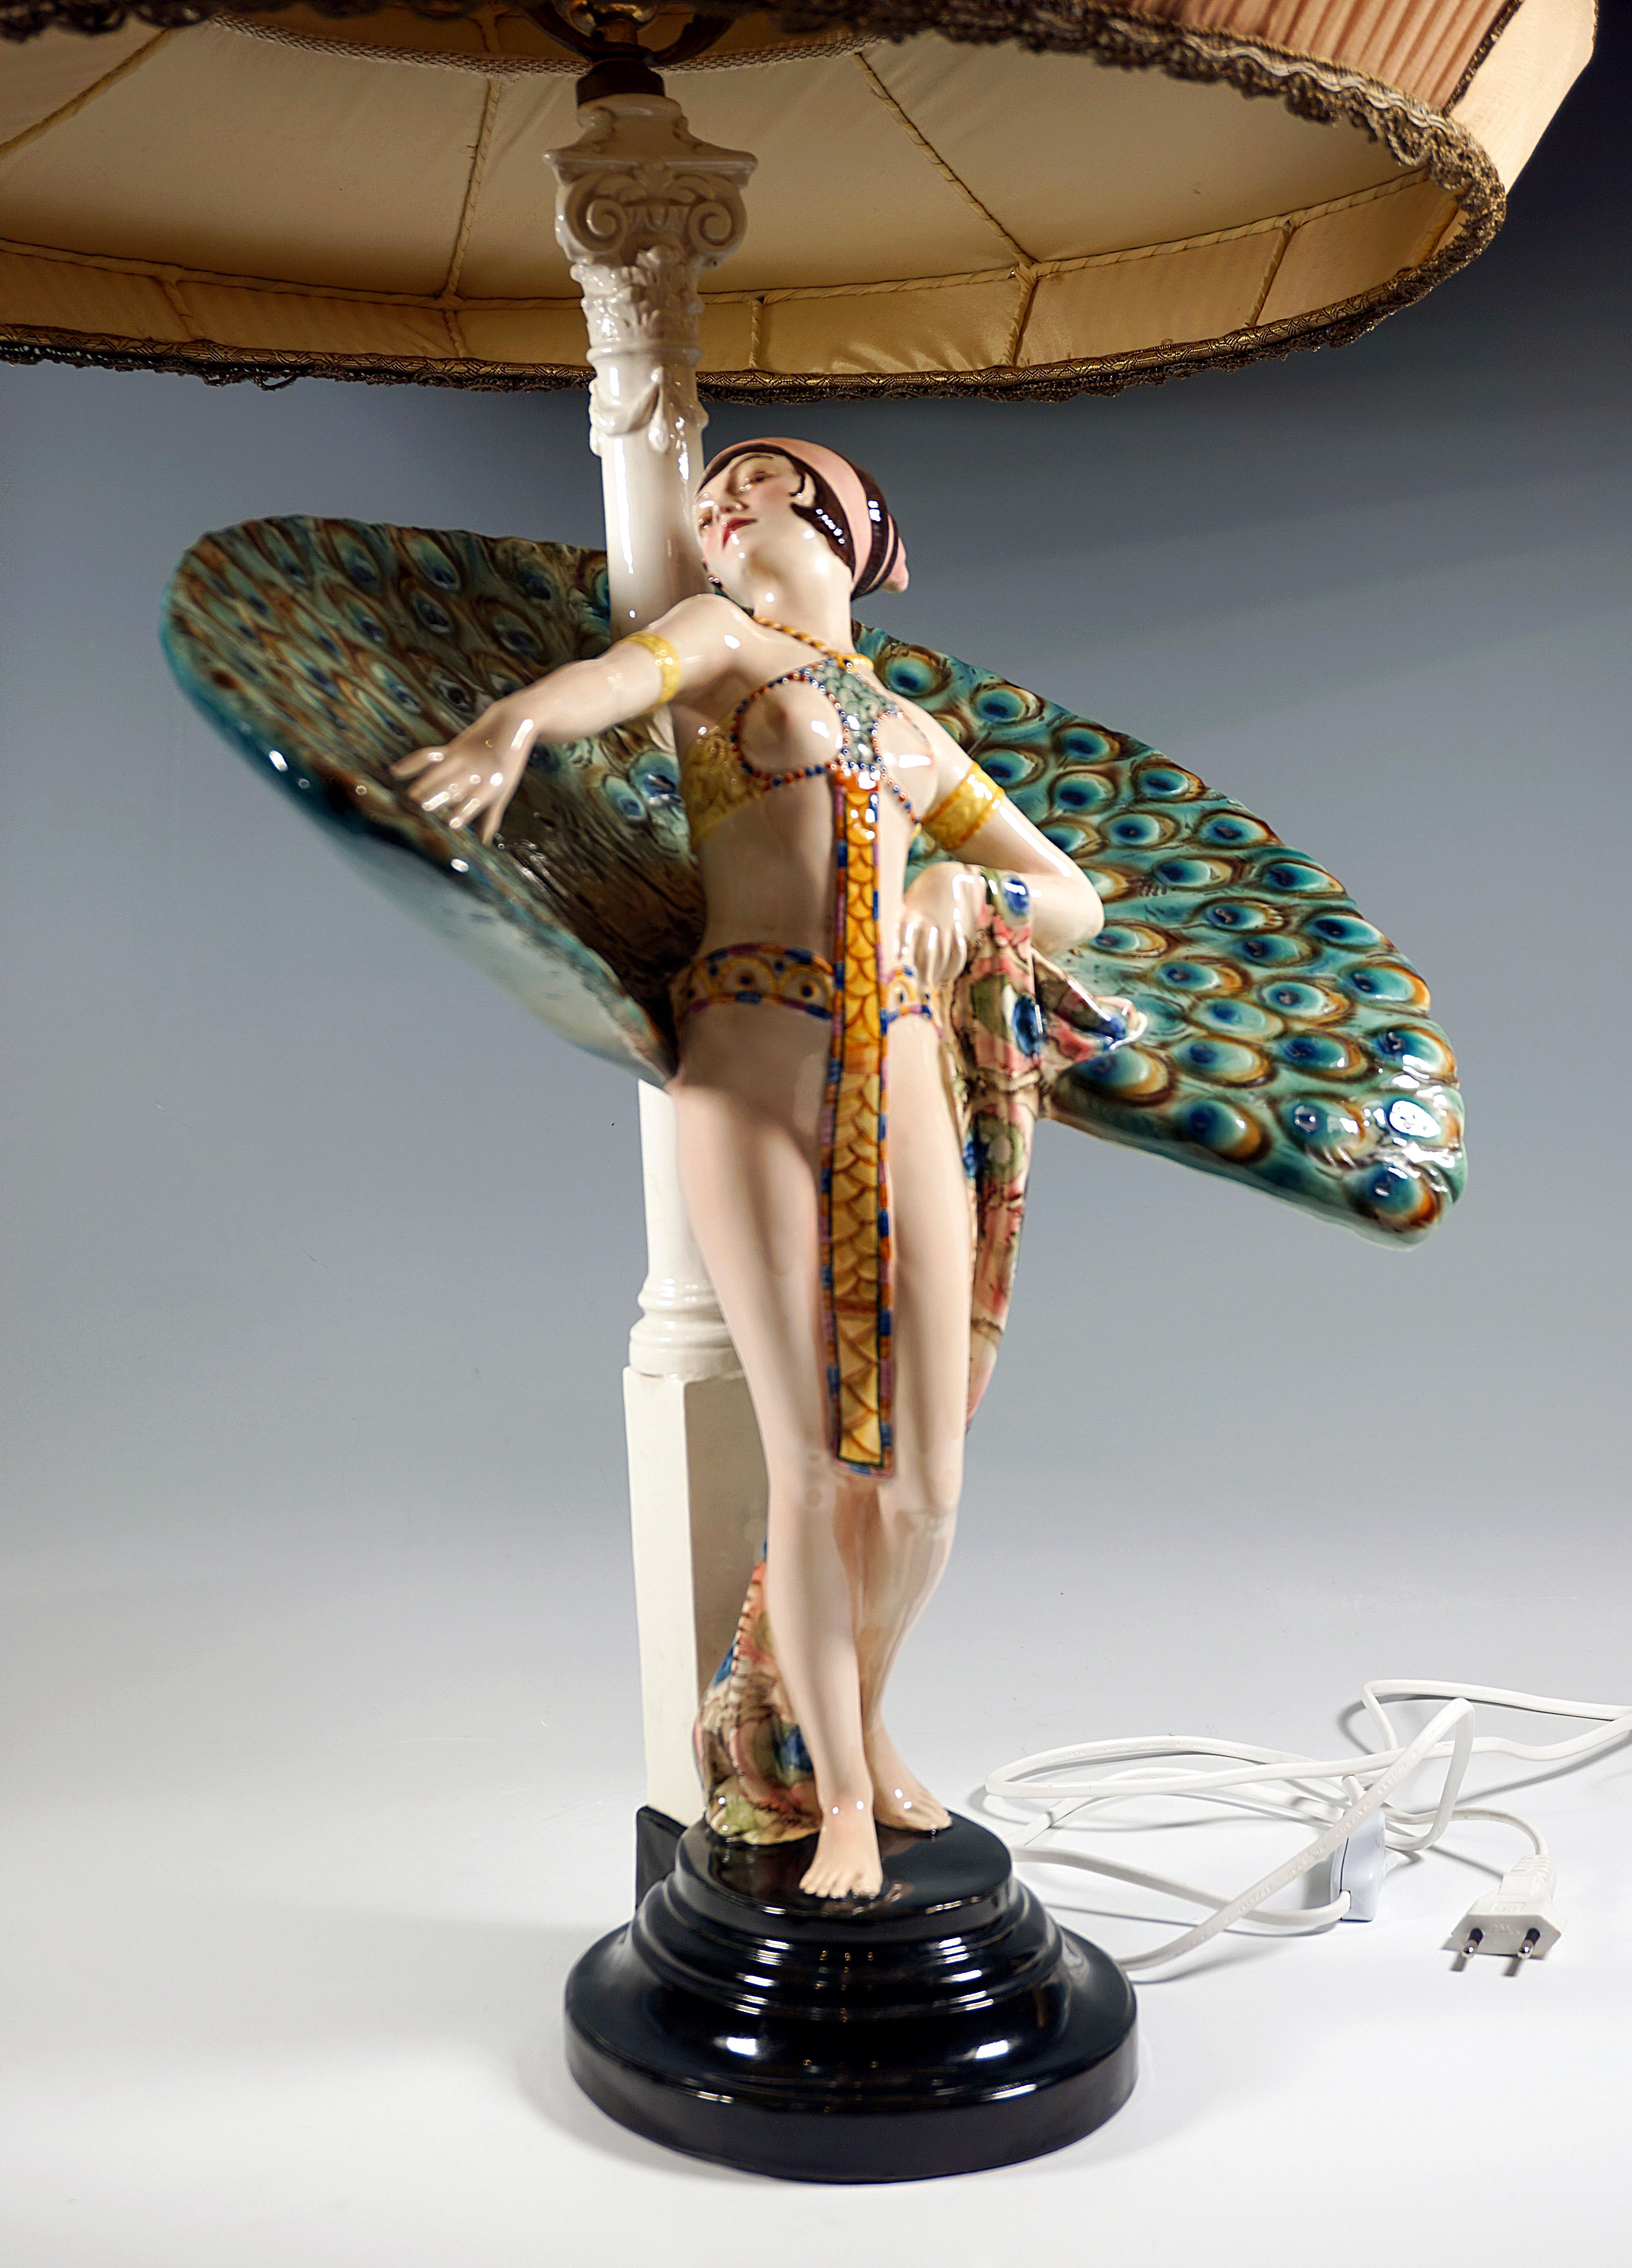 Art Deco Goldscheider Vienna Art-Déco Figure & Lamp, 'Peacock Dancer', by Paul Philippe